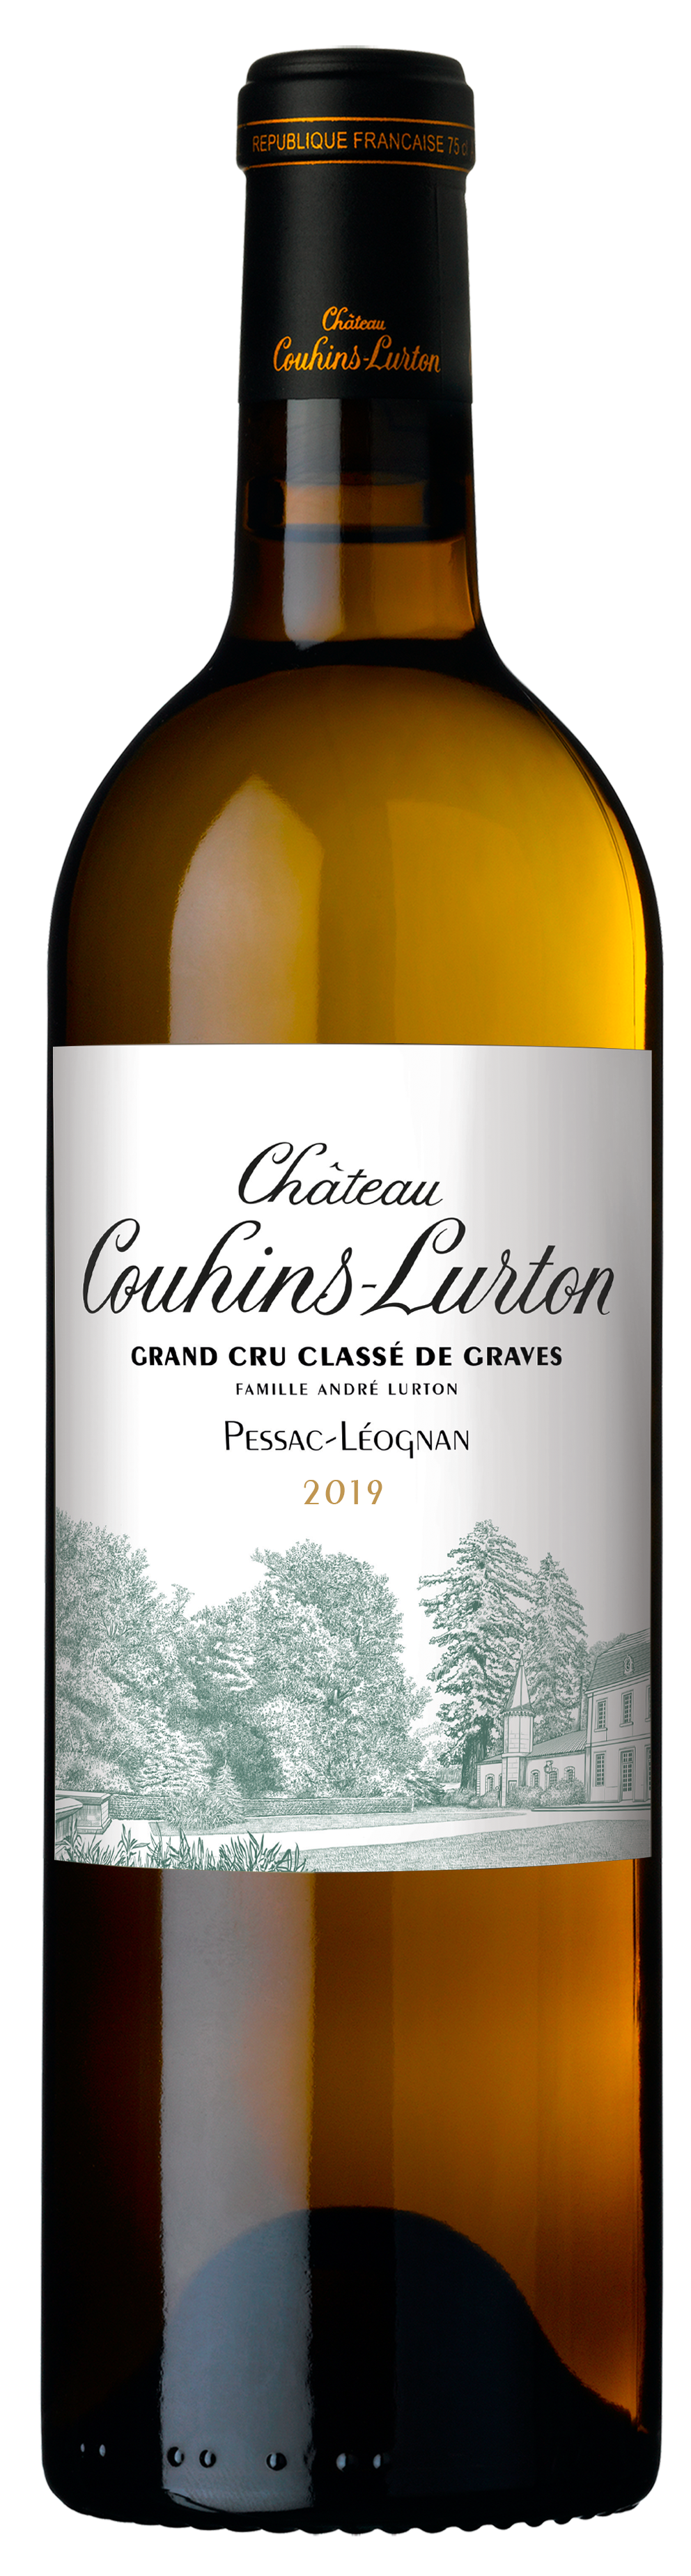 Bottle – 2019 Château Couhins-Lurton white